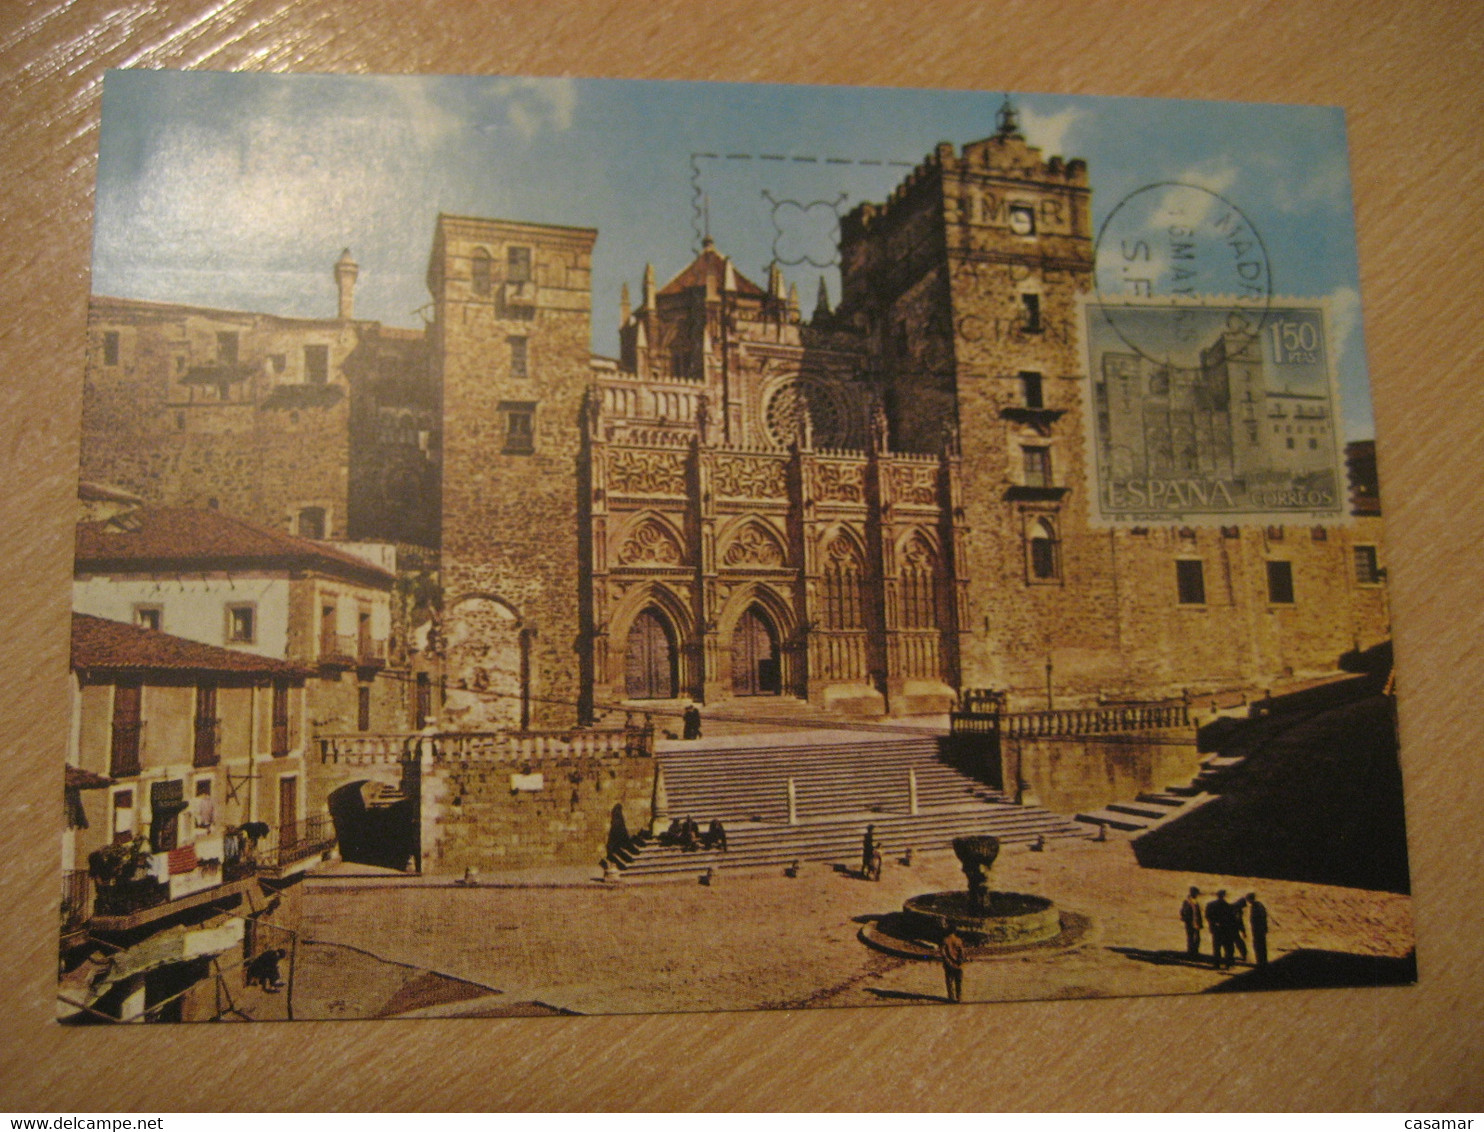 MONASTERIO DE GUADALUPE Caceres Extremadura Tarjeta Postal Postcard MADRID 1966 Maxi Maximum Card SPAIN - Cáceres